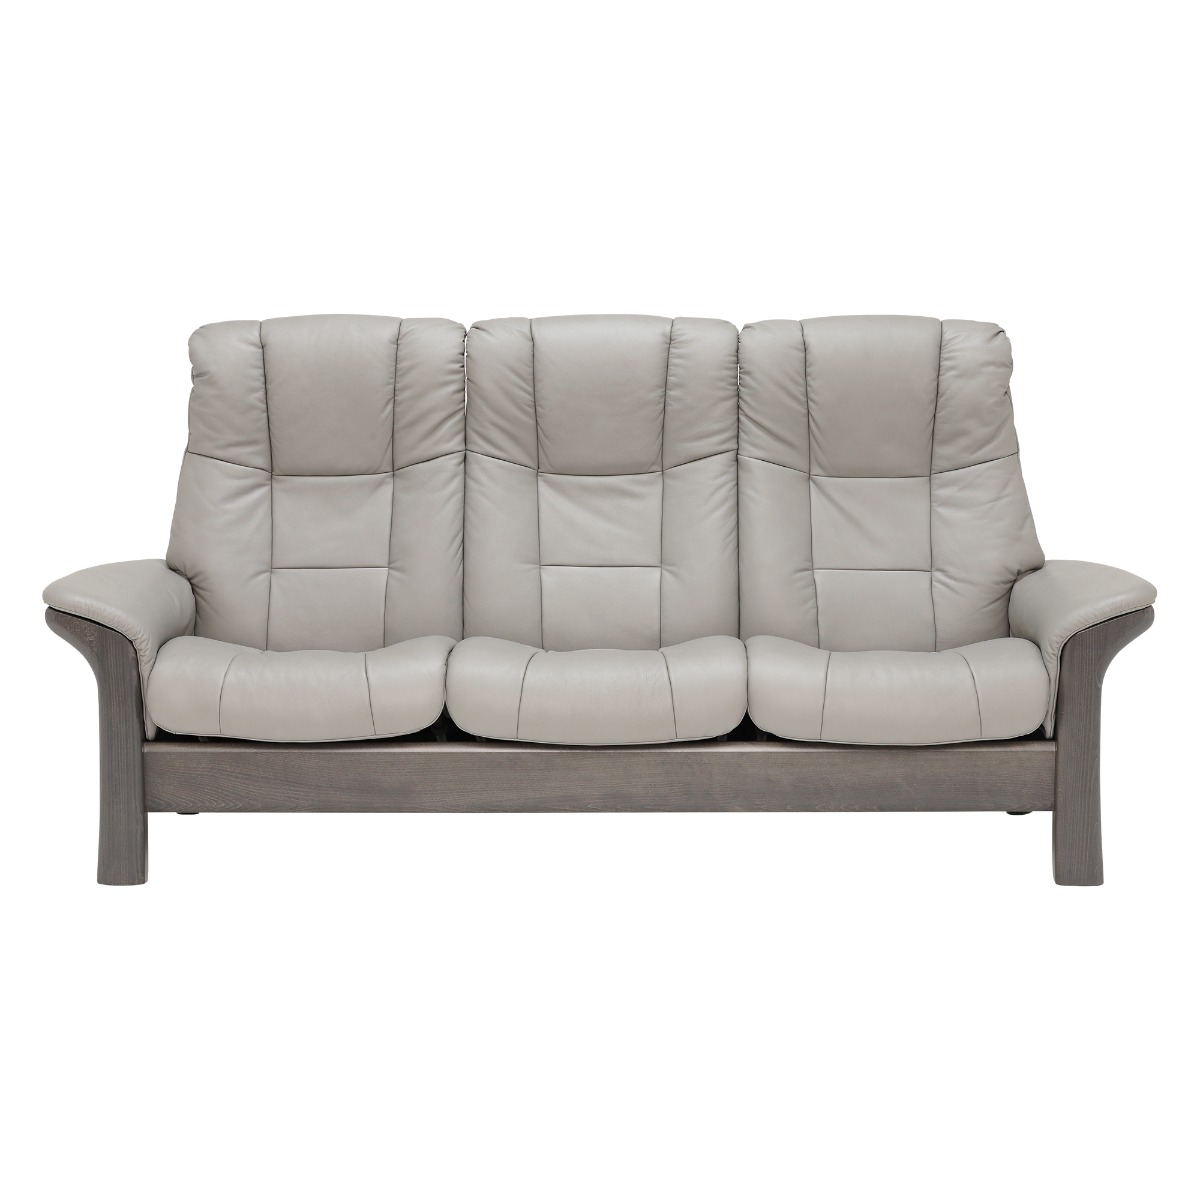 Stressless Windsor High Back 3 Seater Recliner Sofa, Grey Leather | Barker & Stonehouse